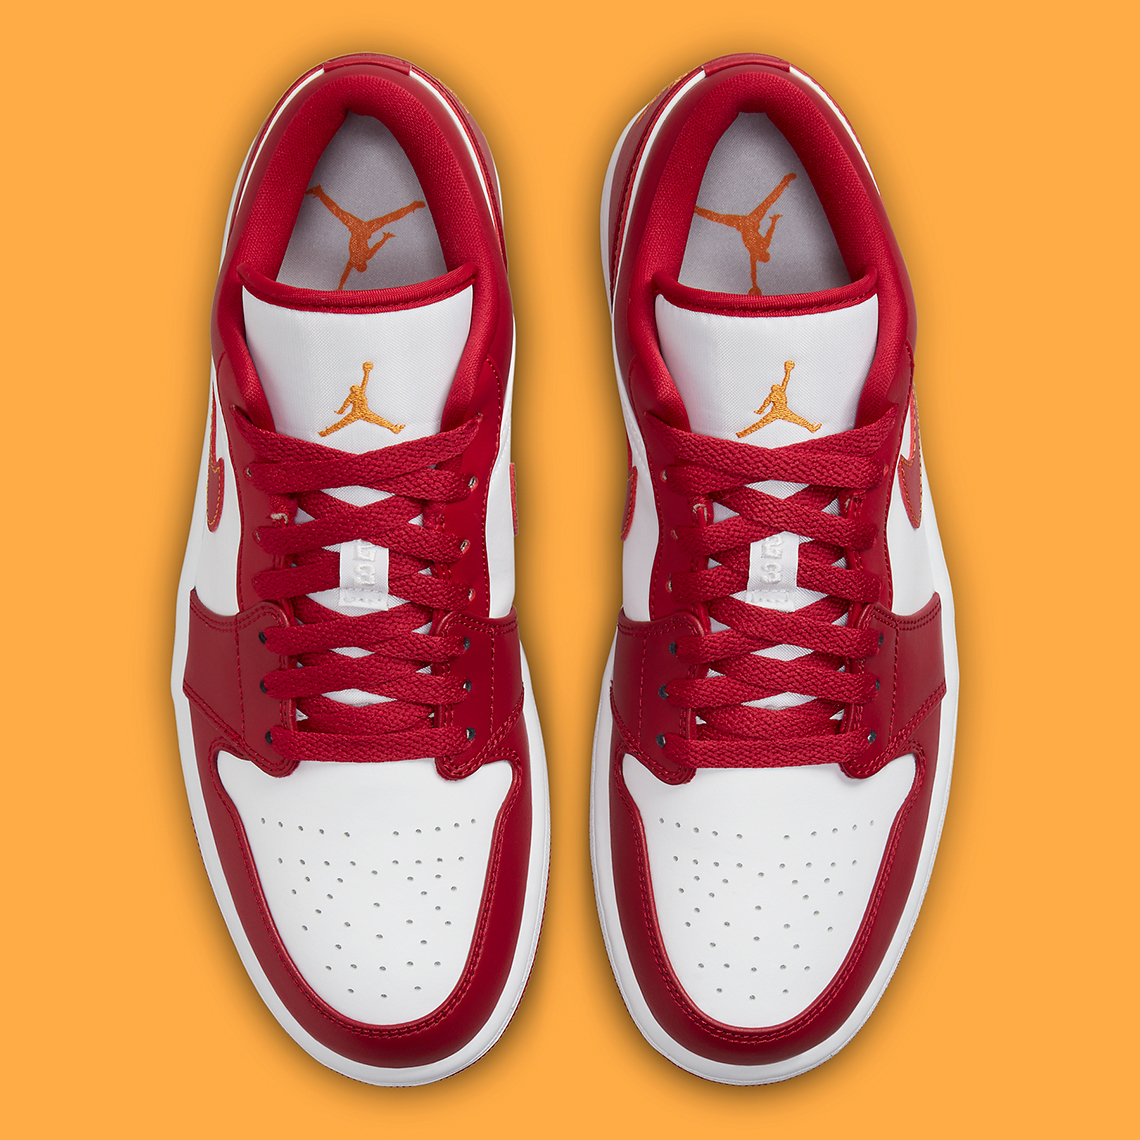 Air Jordan 1 Low Cardinal Red 553558 607 2